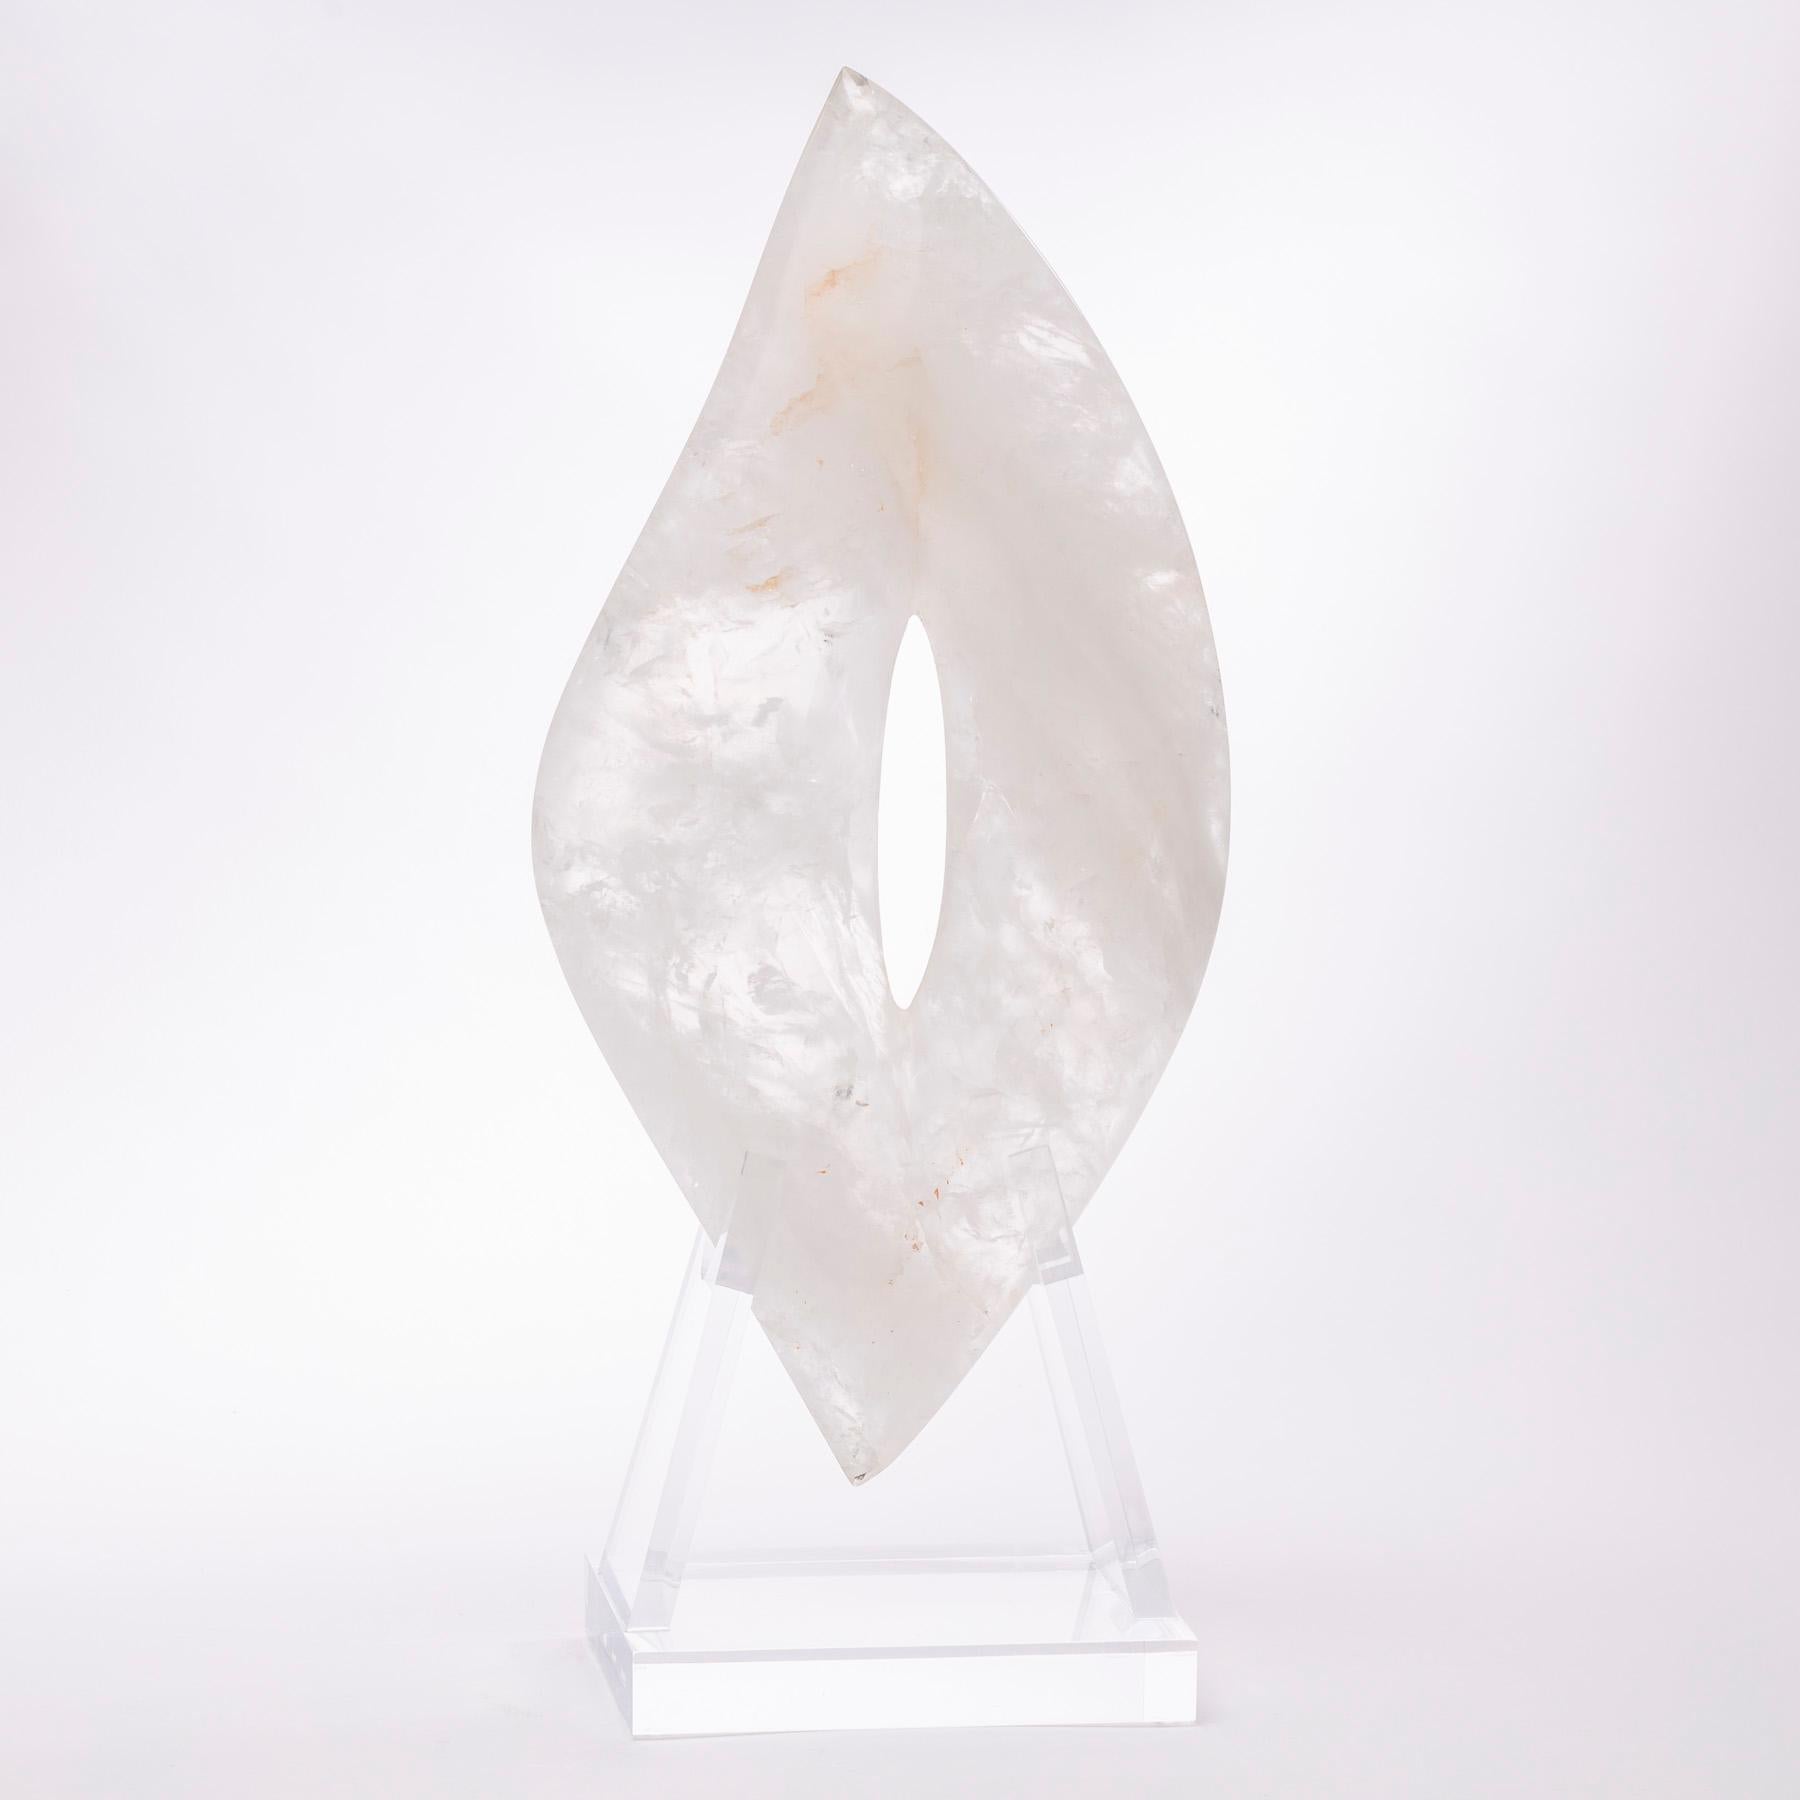 Brazilian white quartz sculpture mounted on custom acrylic base.
       